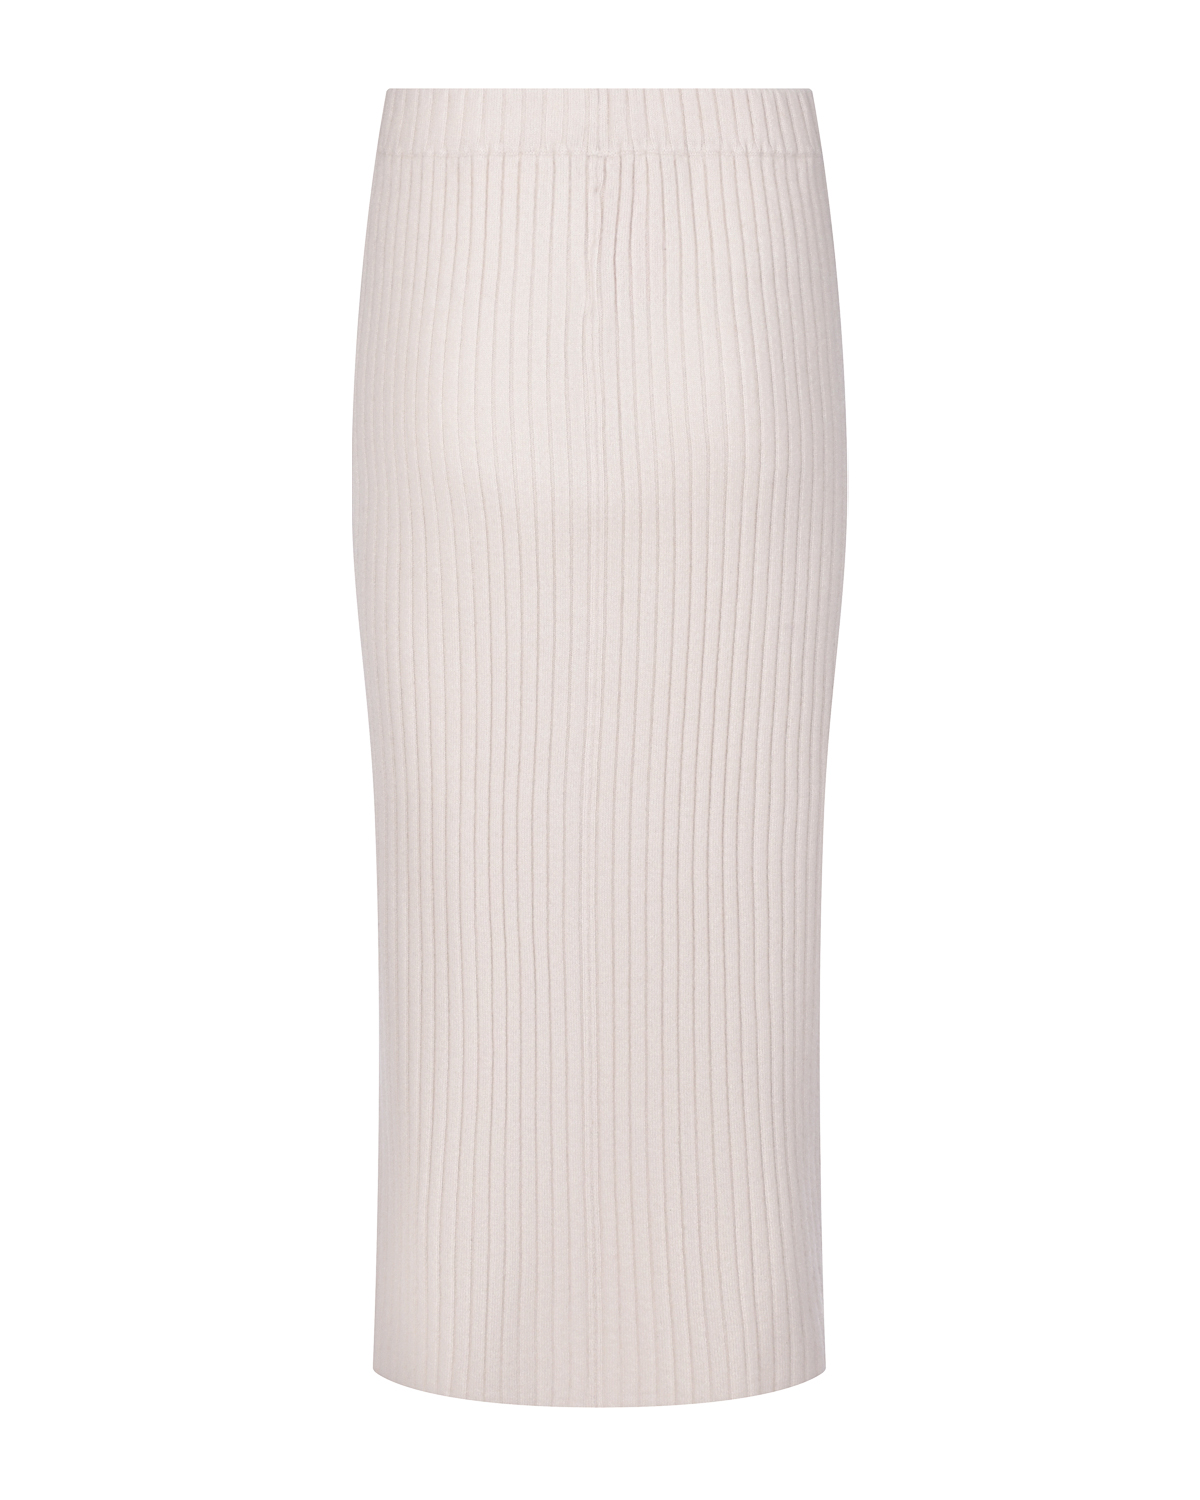 Светло-серая юбка из кашемира Allude, размер 38, цвет нет цвета - фото 2